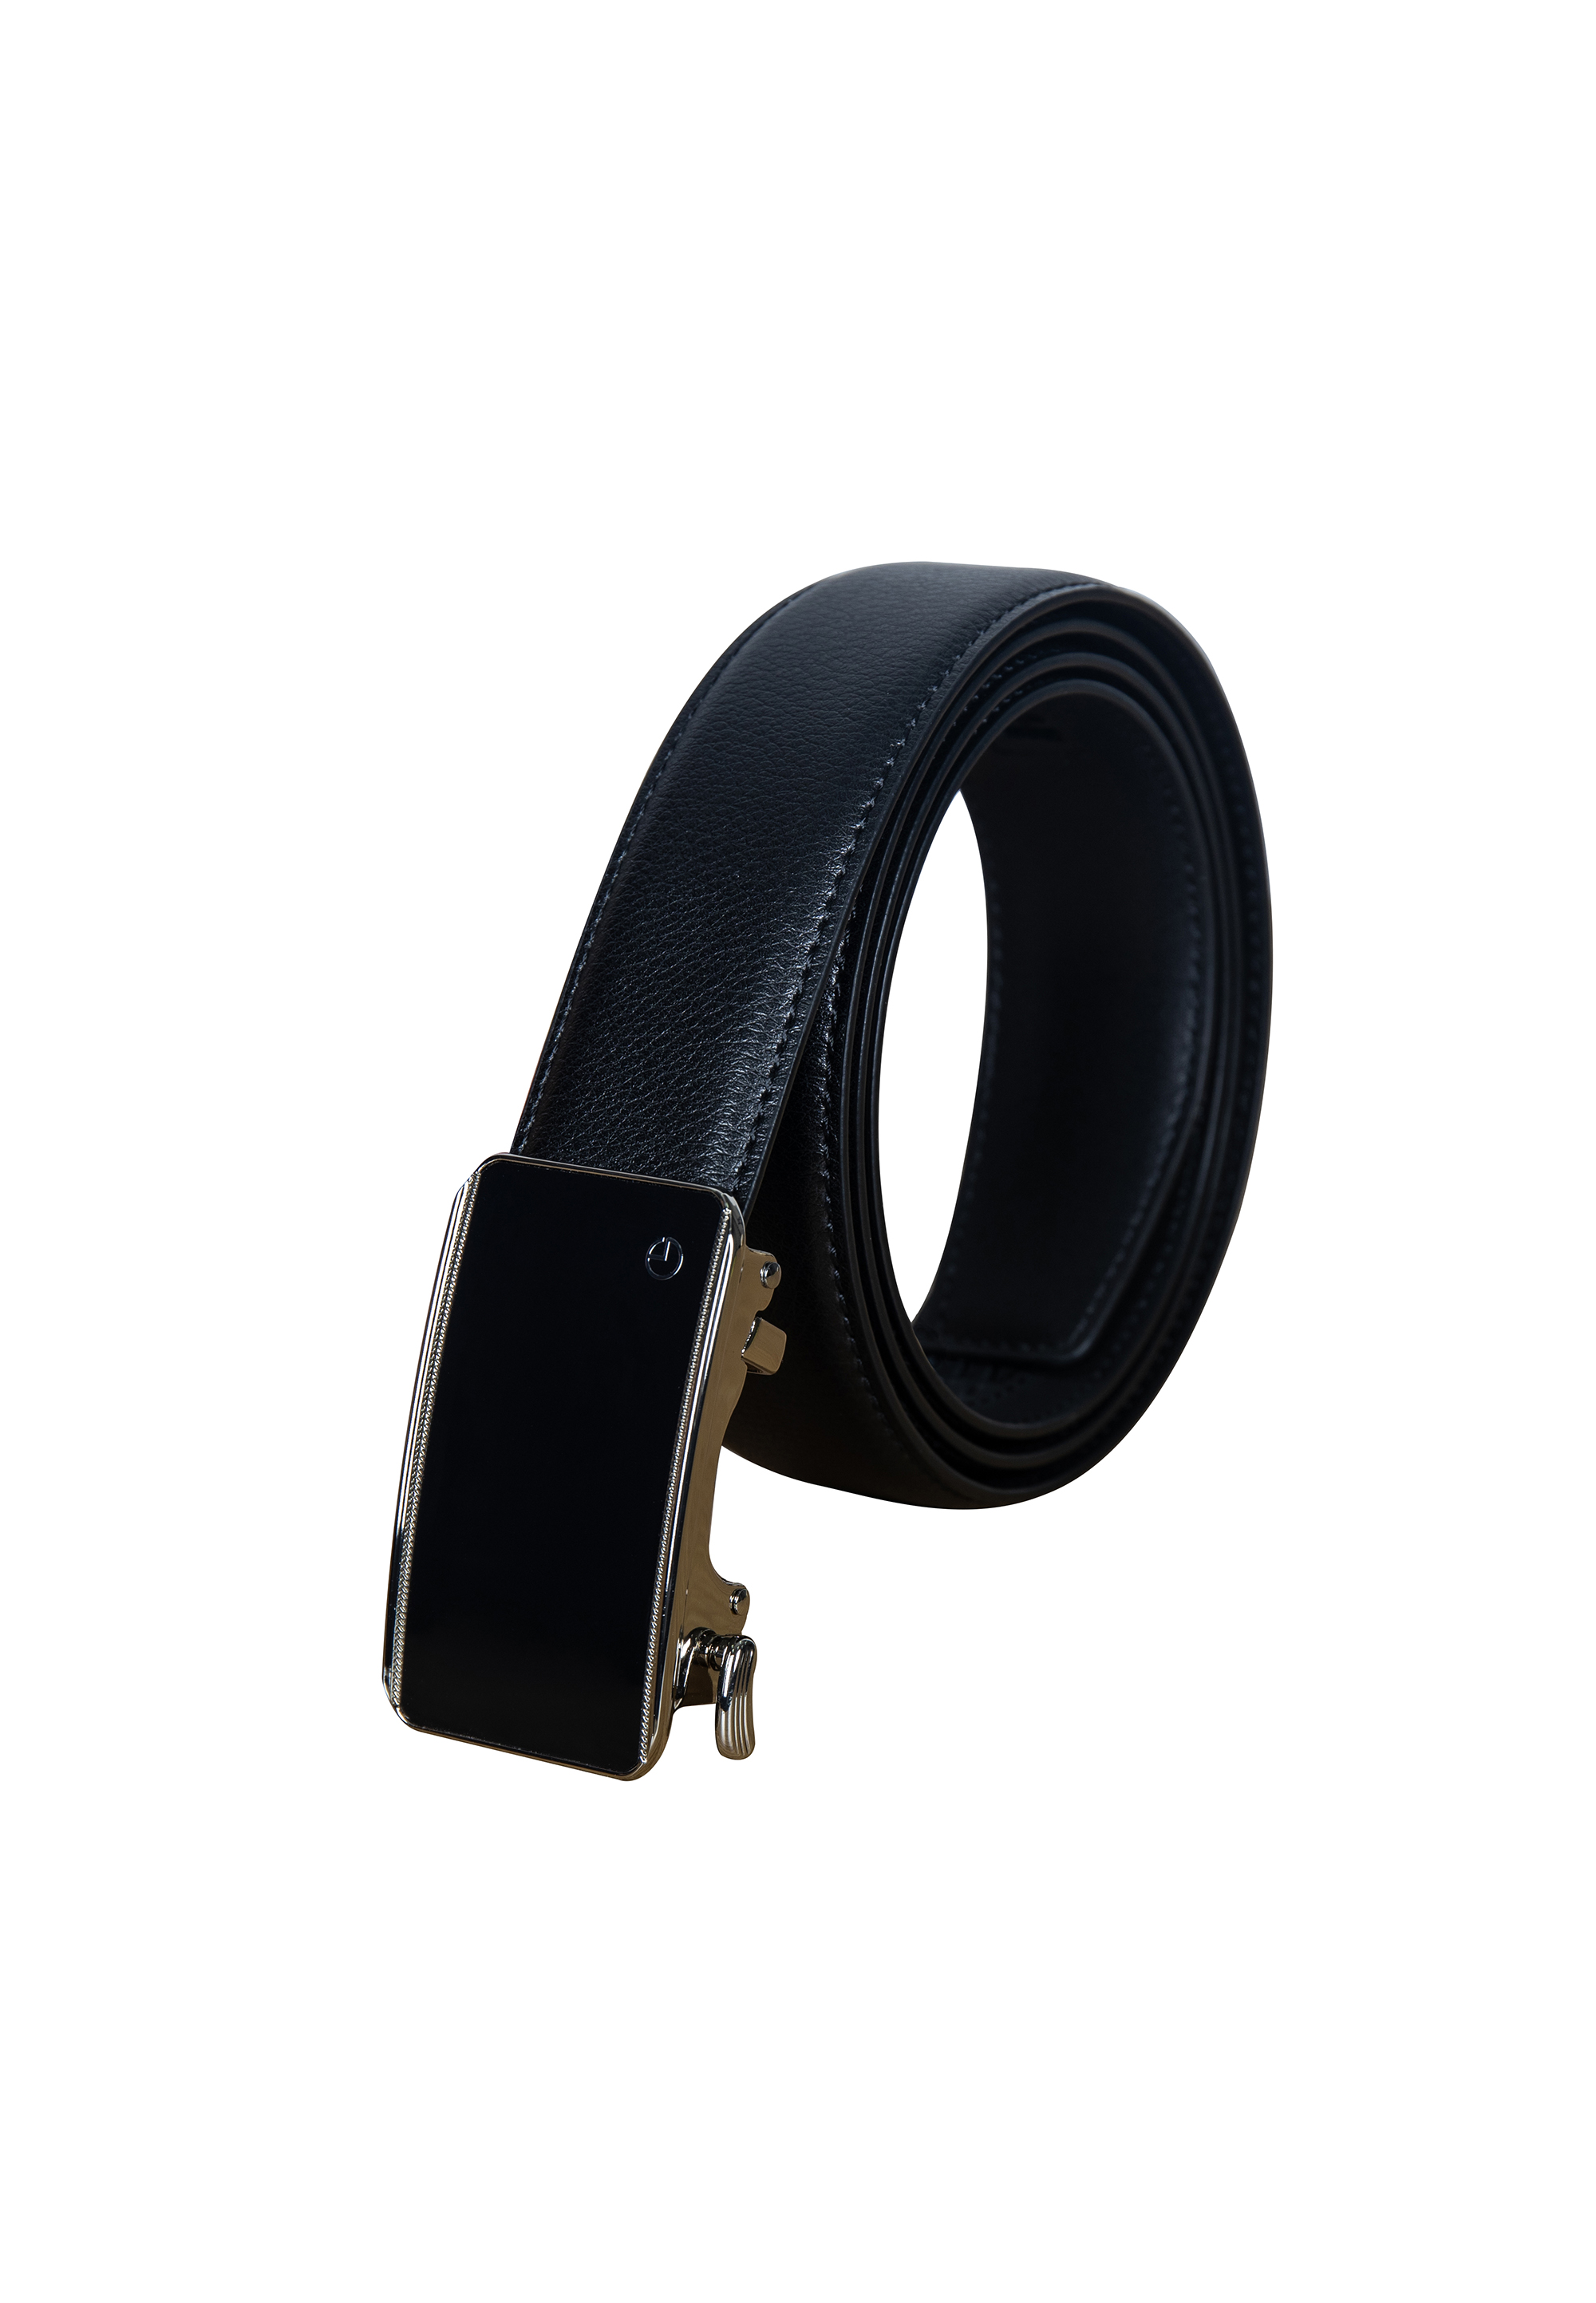 Goldlion Men Leather Auto Lock Buckle Belt - Black